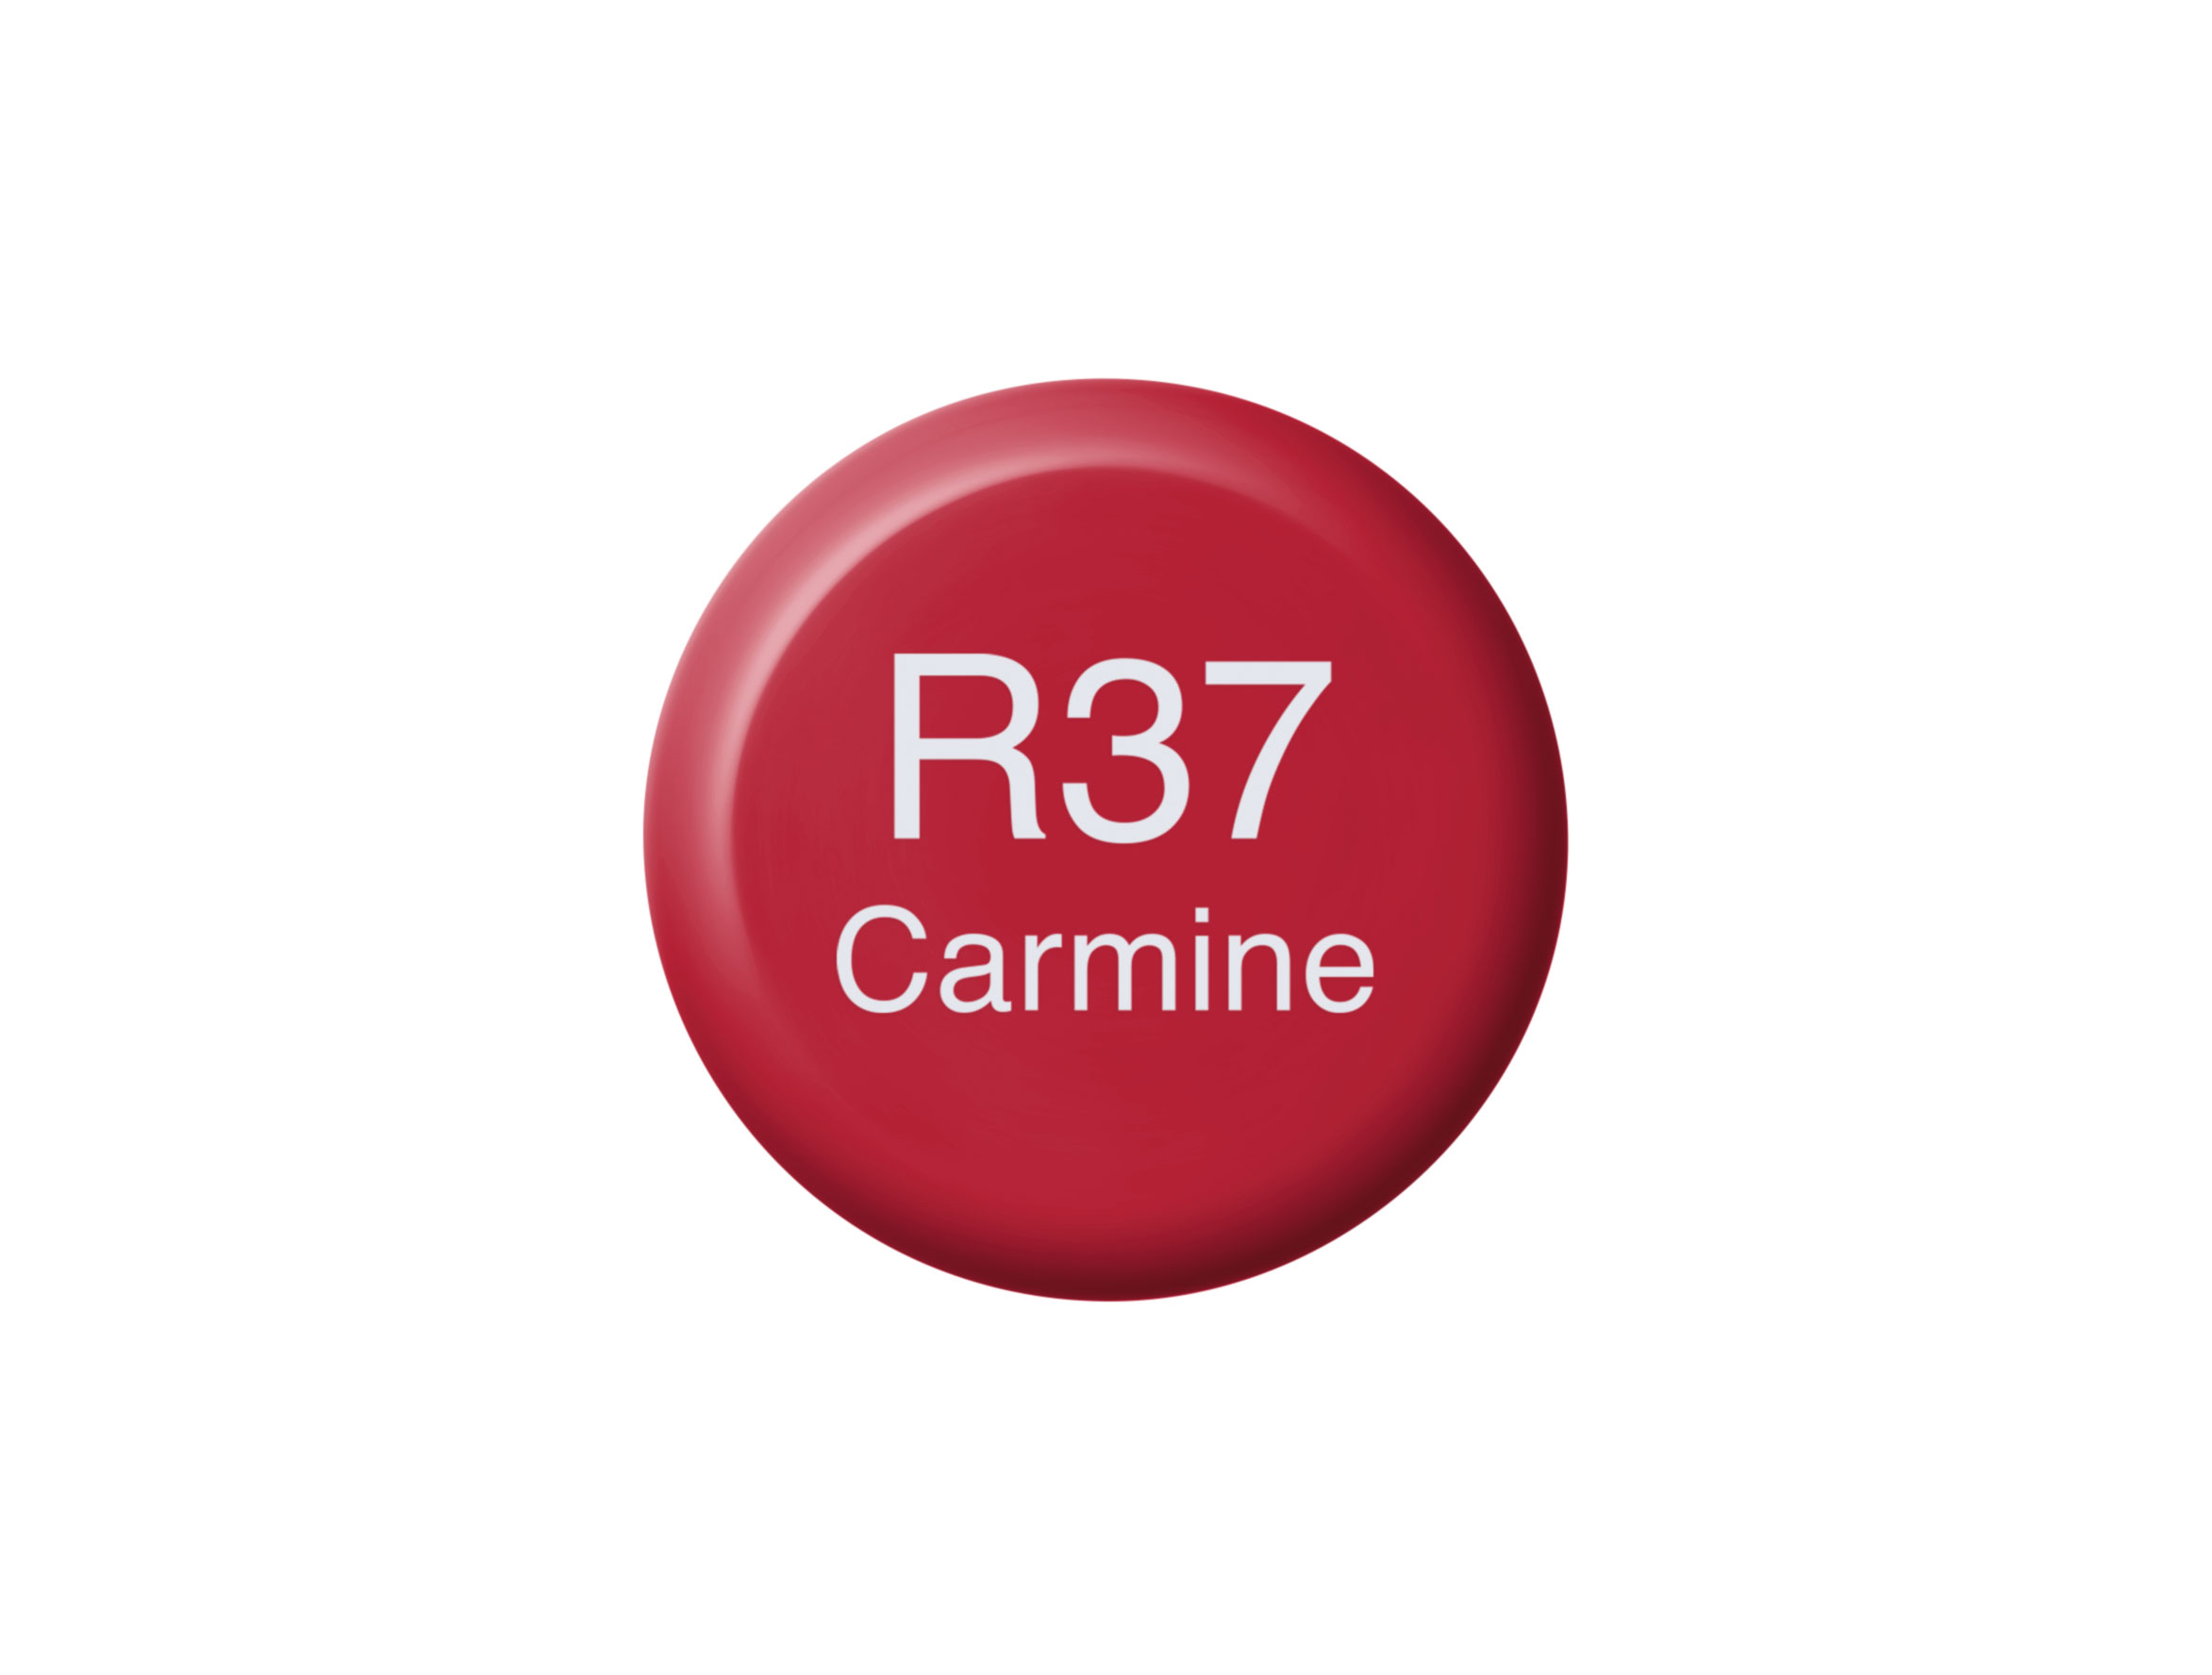 Copic Ink R37 Carmine